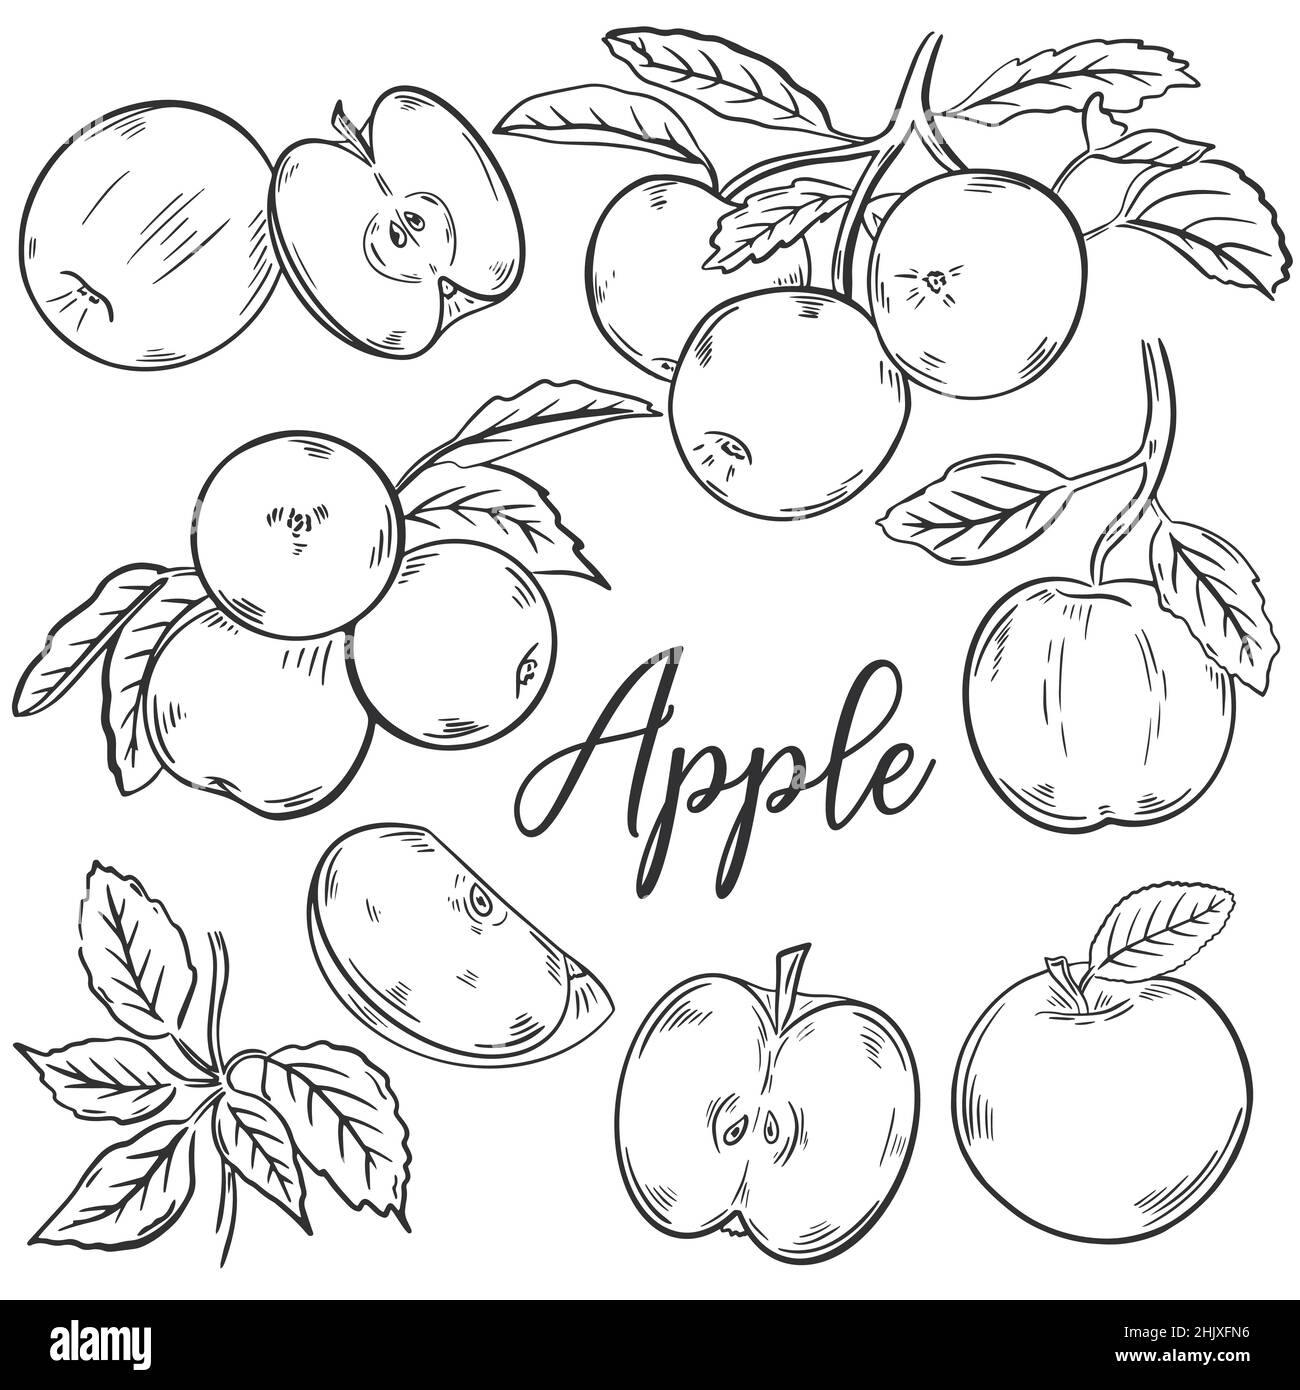 Apples sketch hand drawn set Stock Vector